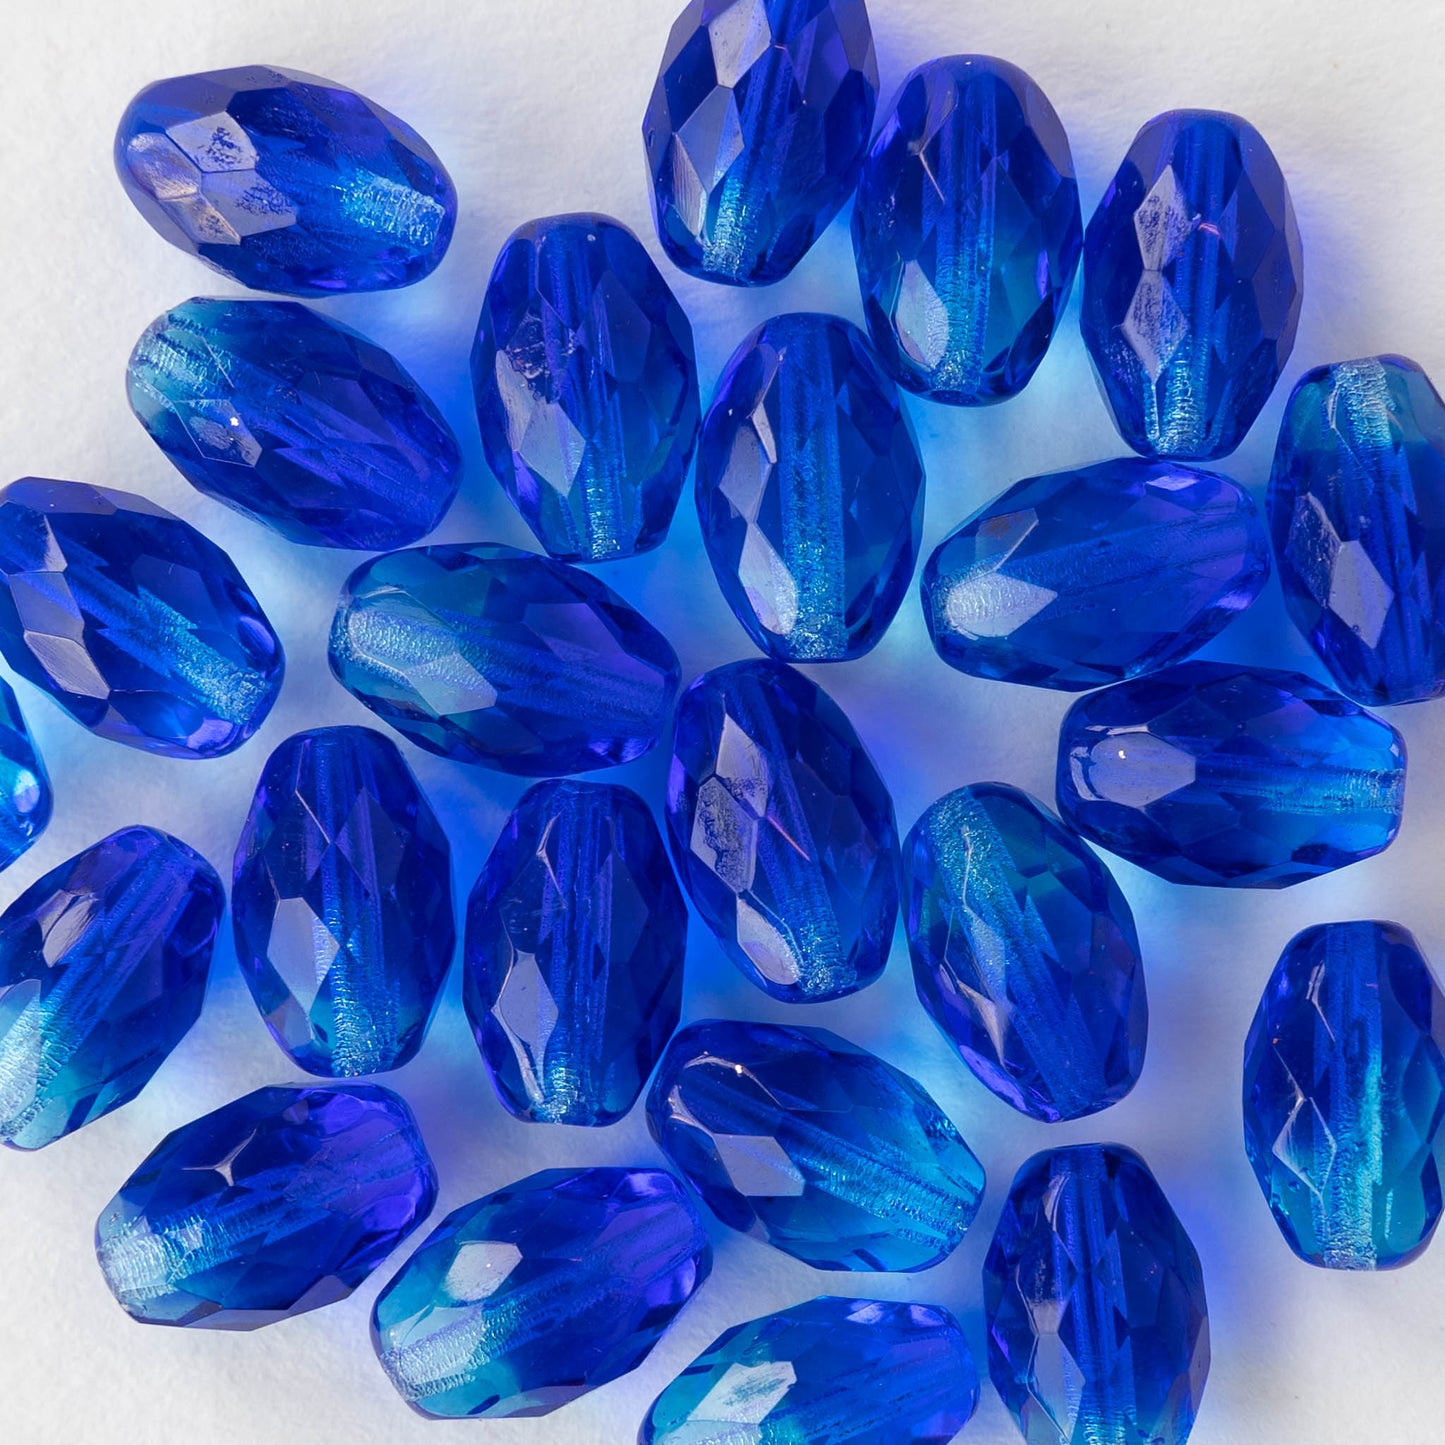 8x12mm Firepolished Glass Oval Beads - Azure Blue Mix - 10 beads